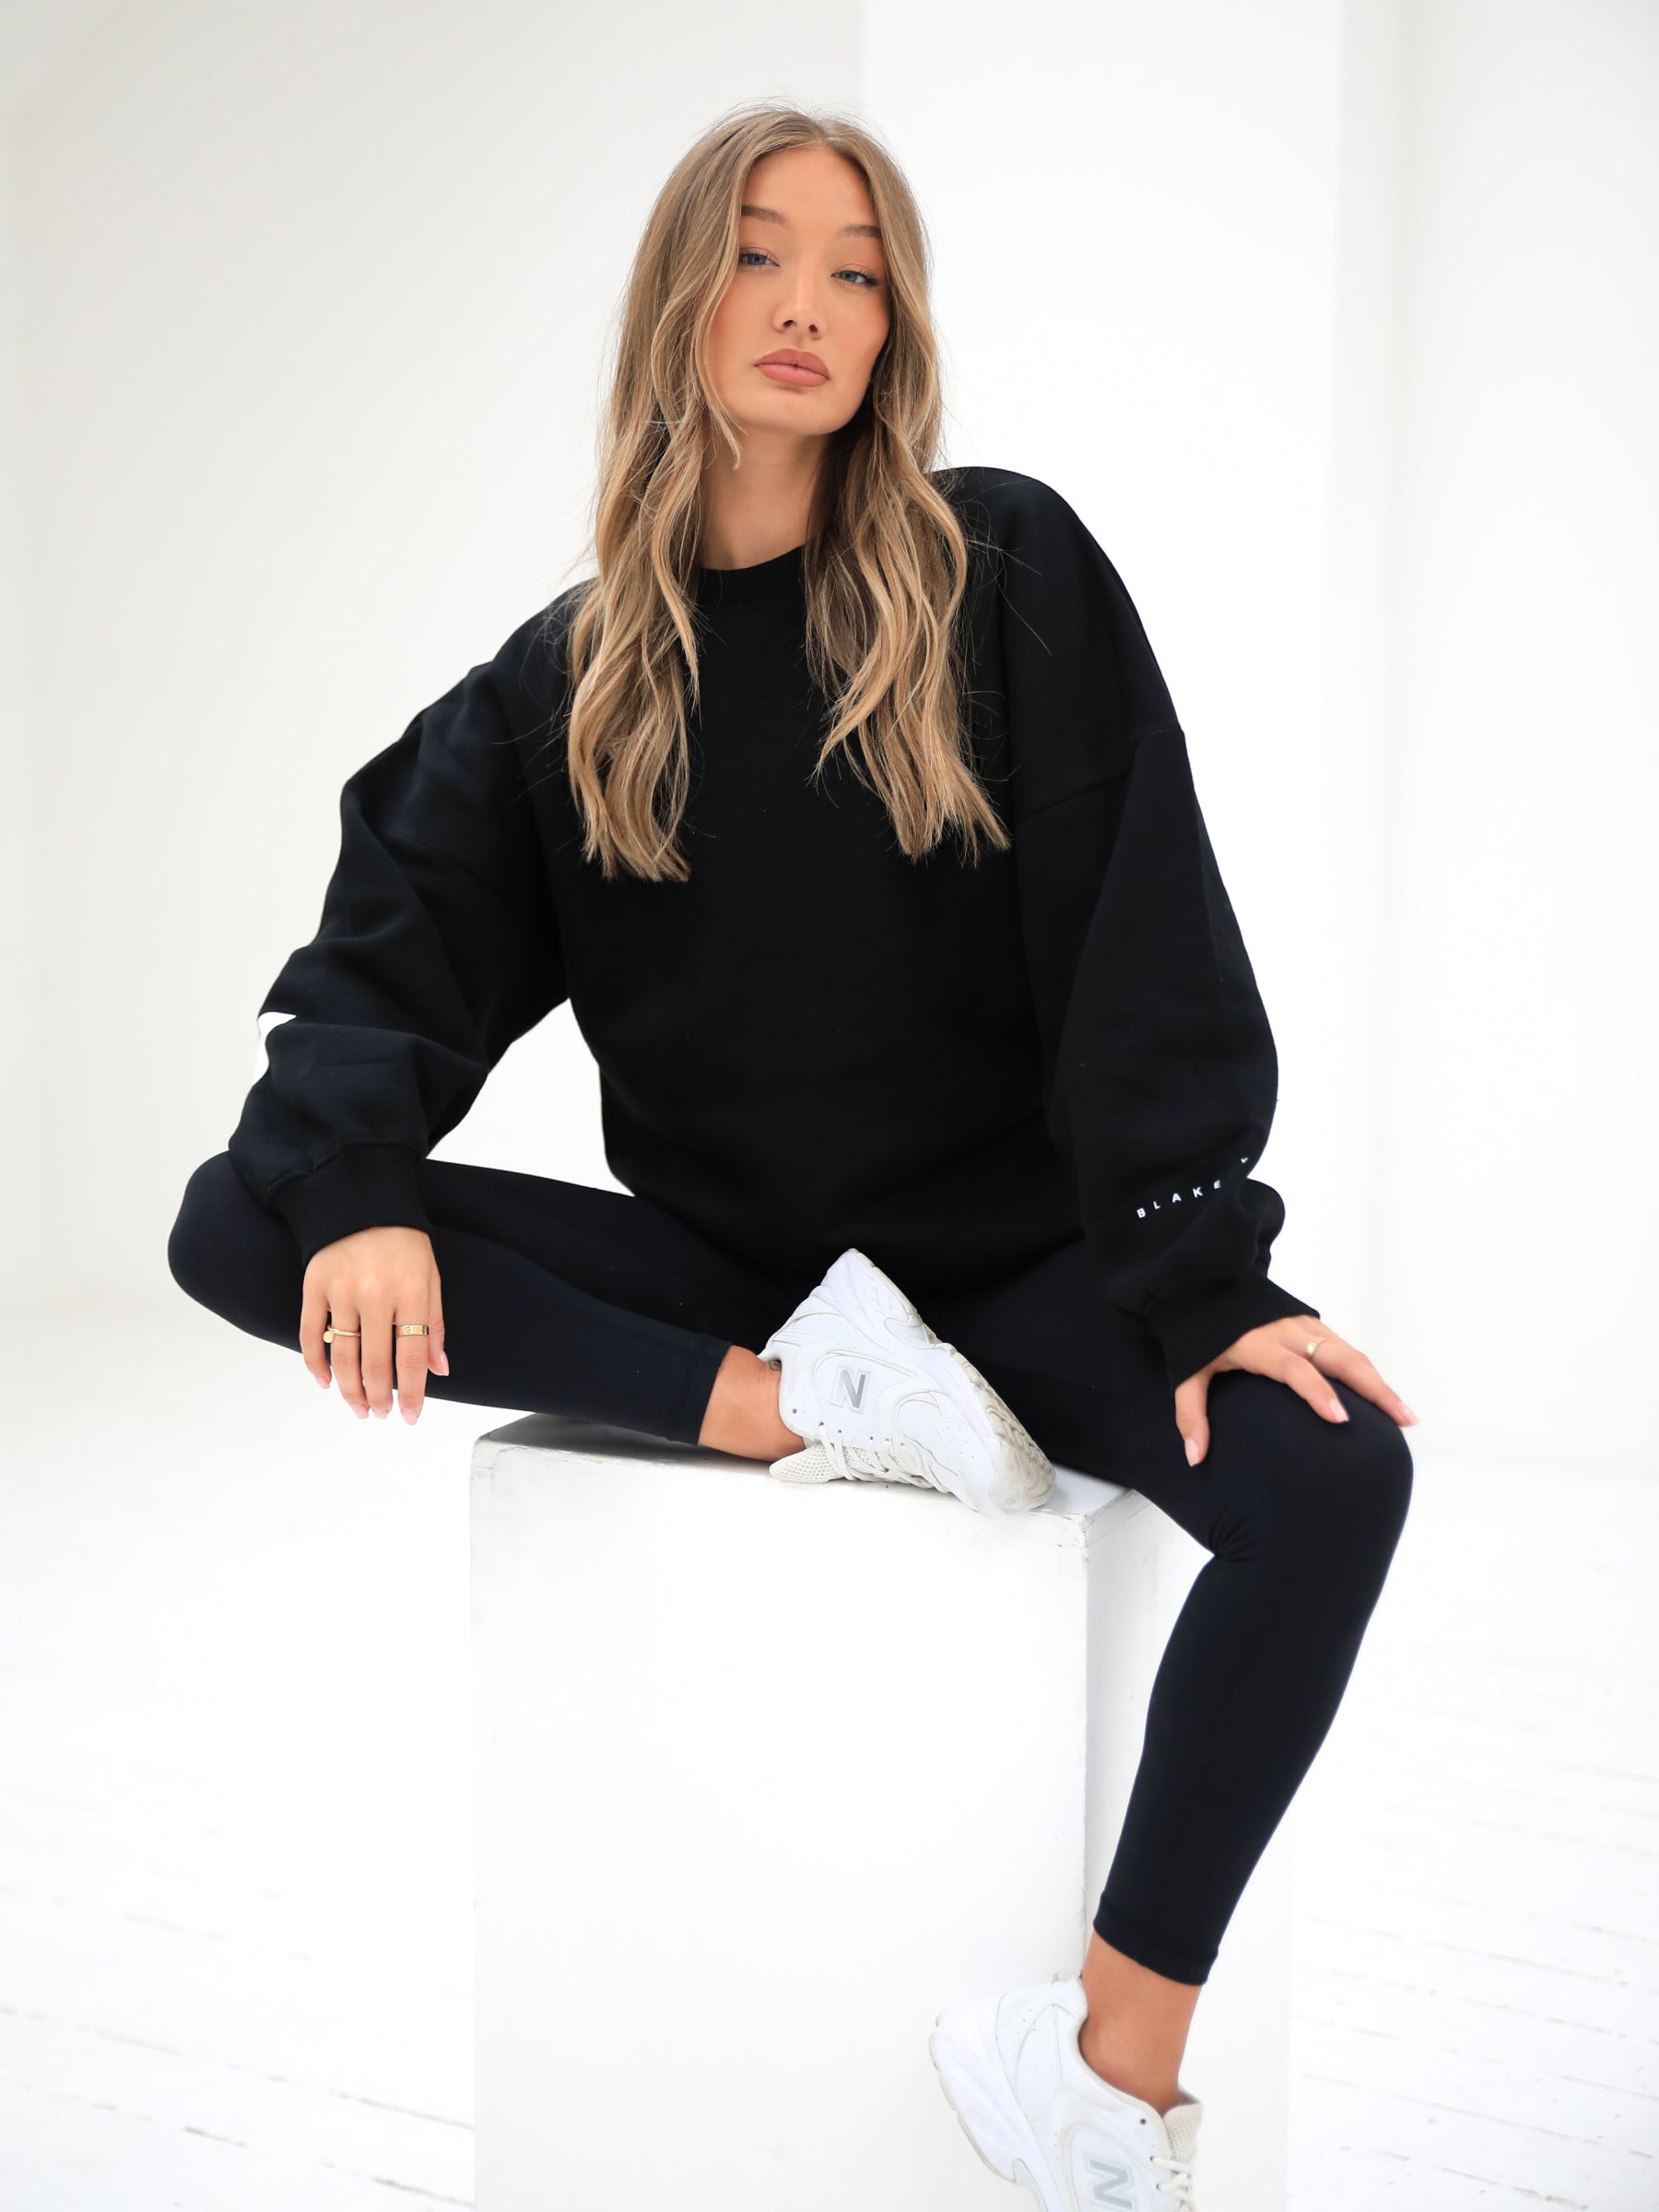 Legmogue Women's Fuzzy Lush Soft Cotton Blend Sweater Tights Black  Small/Medium at  Women's Clothing store